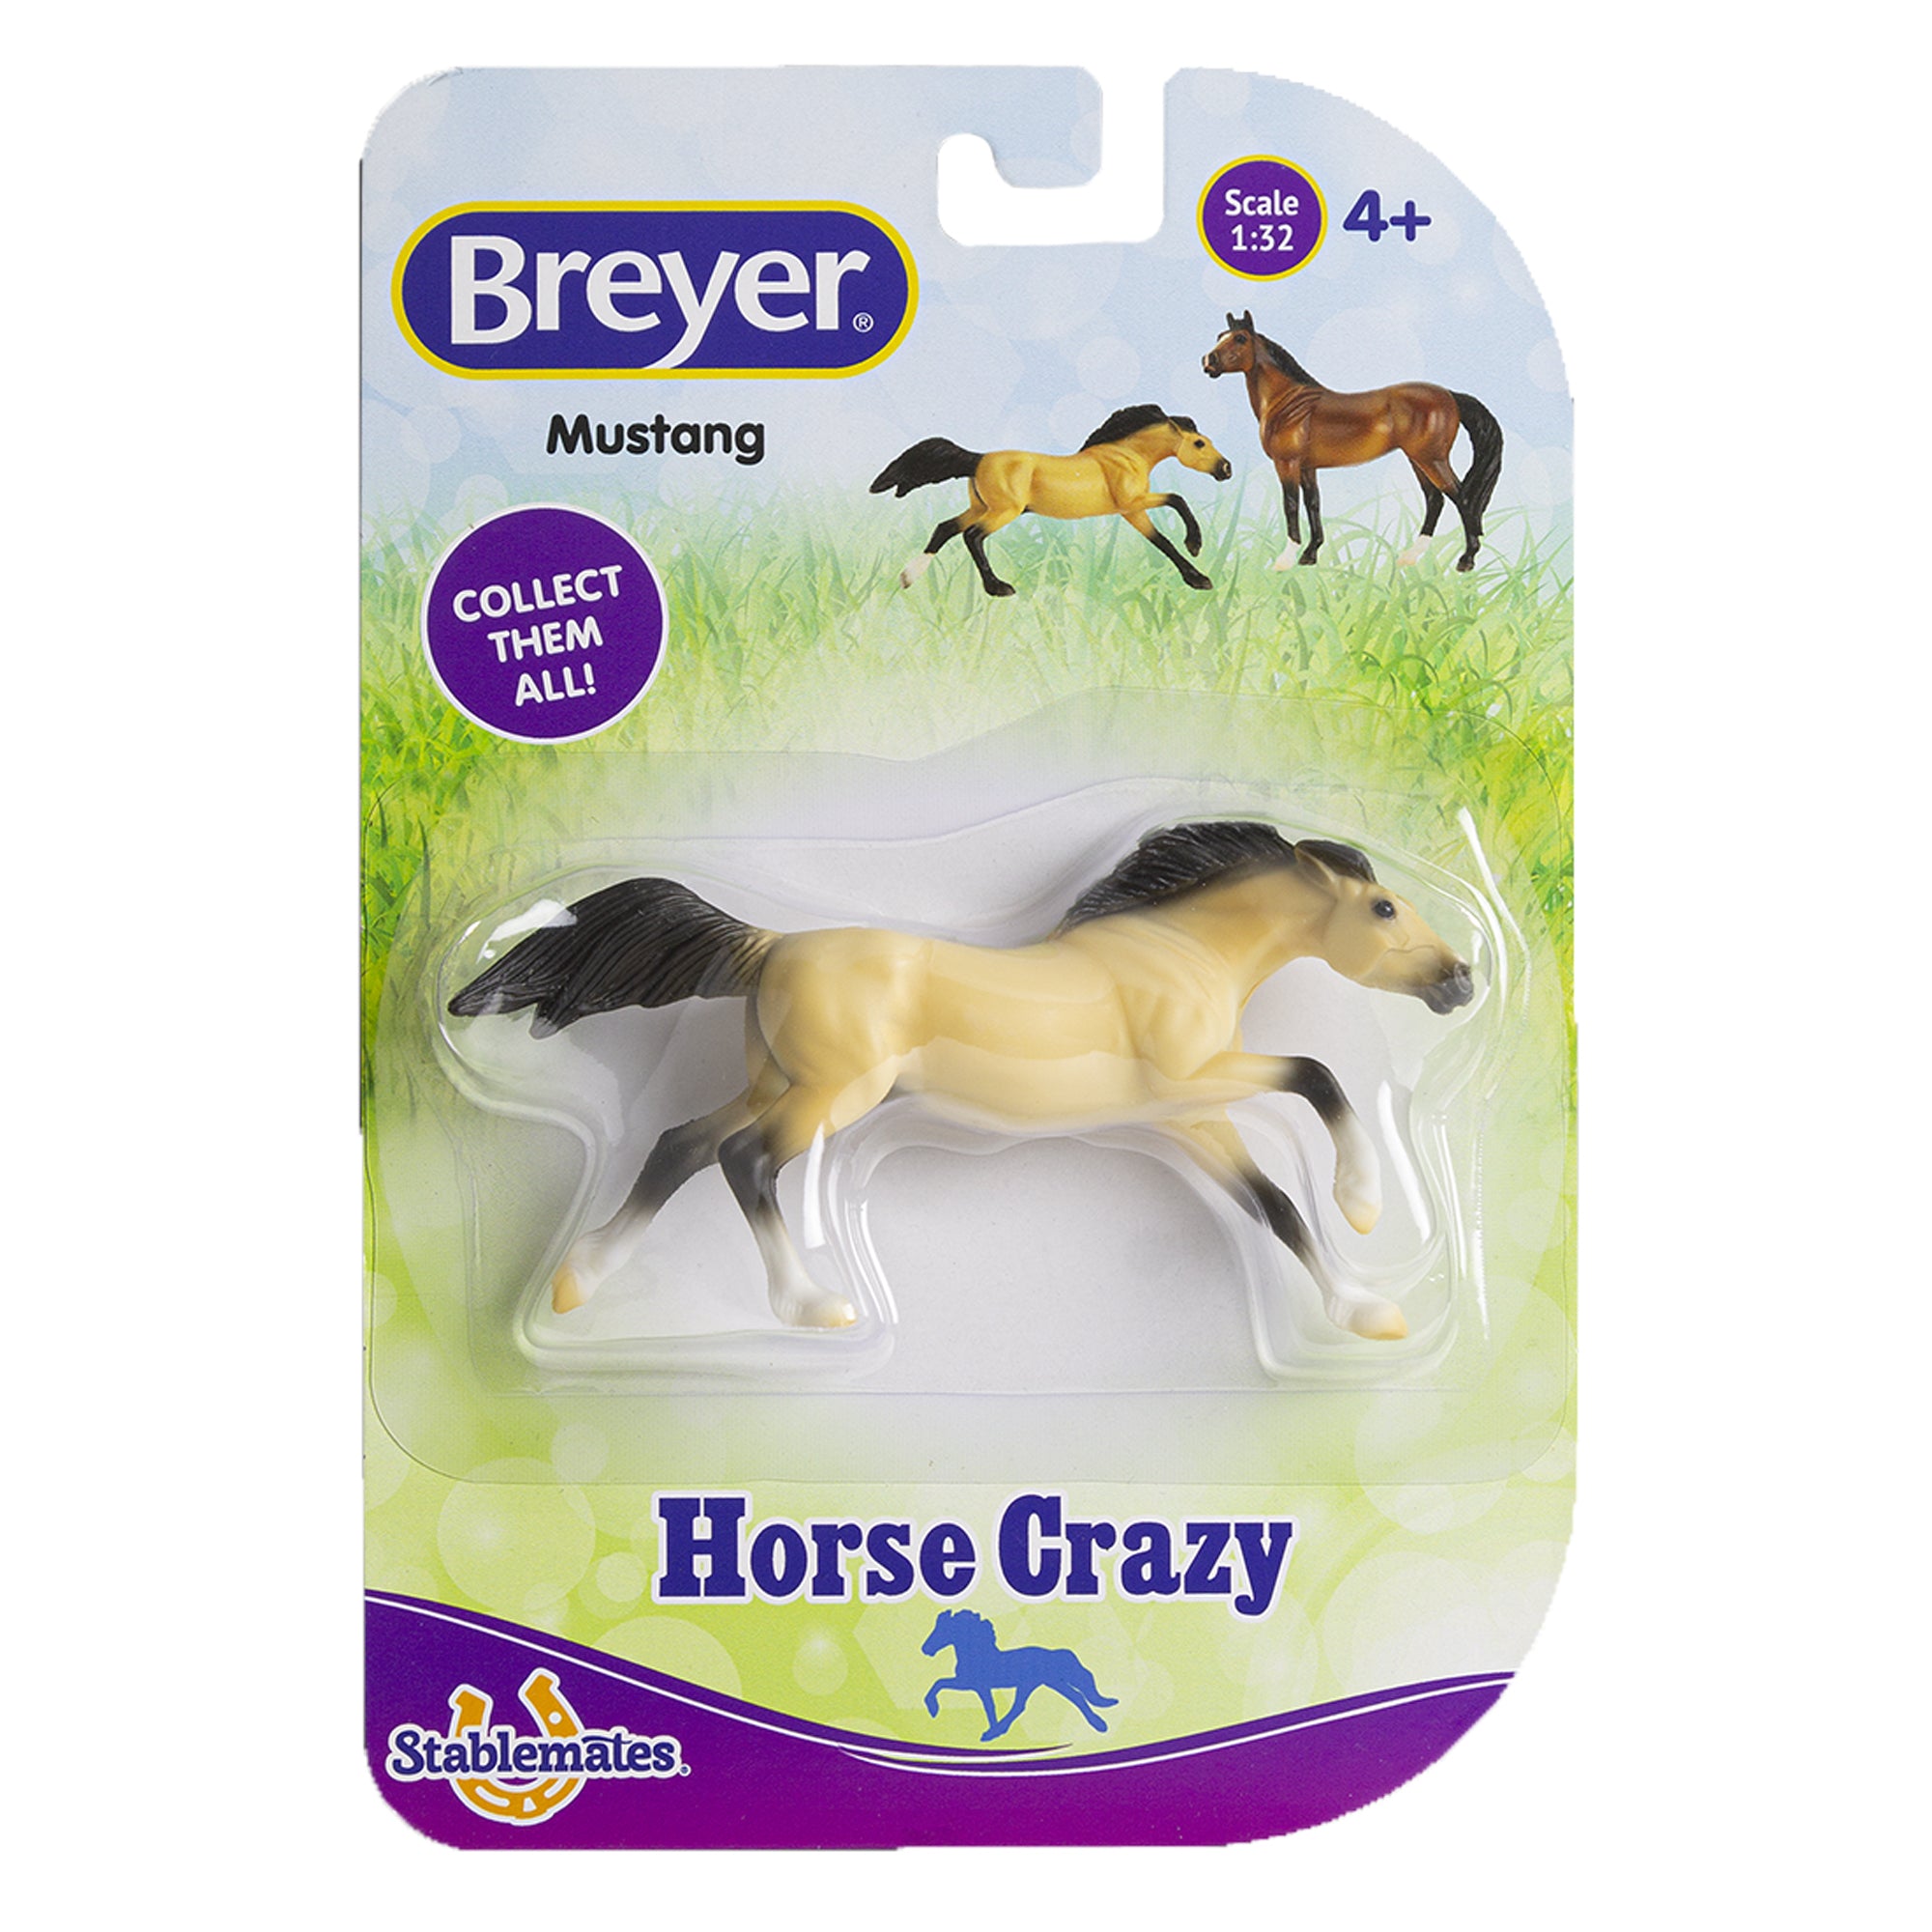 Breyer Stablemates Horse Crazy Assortment 97244